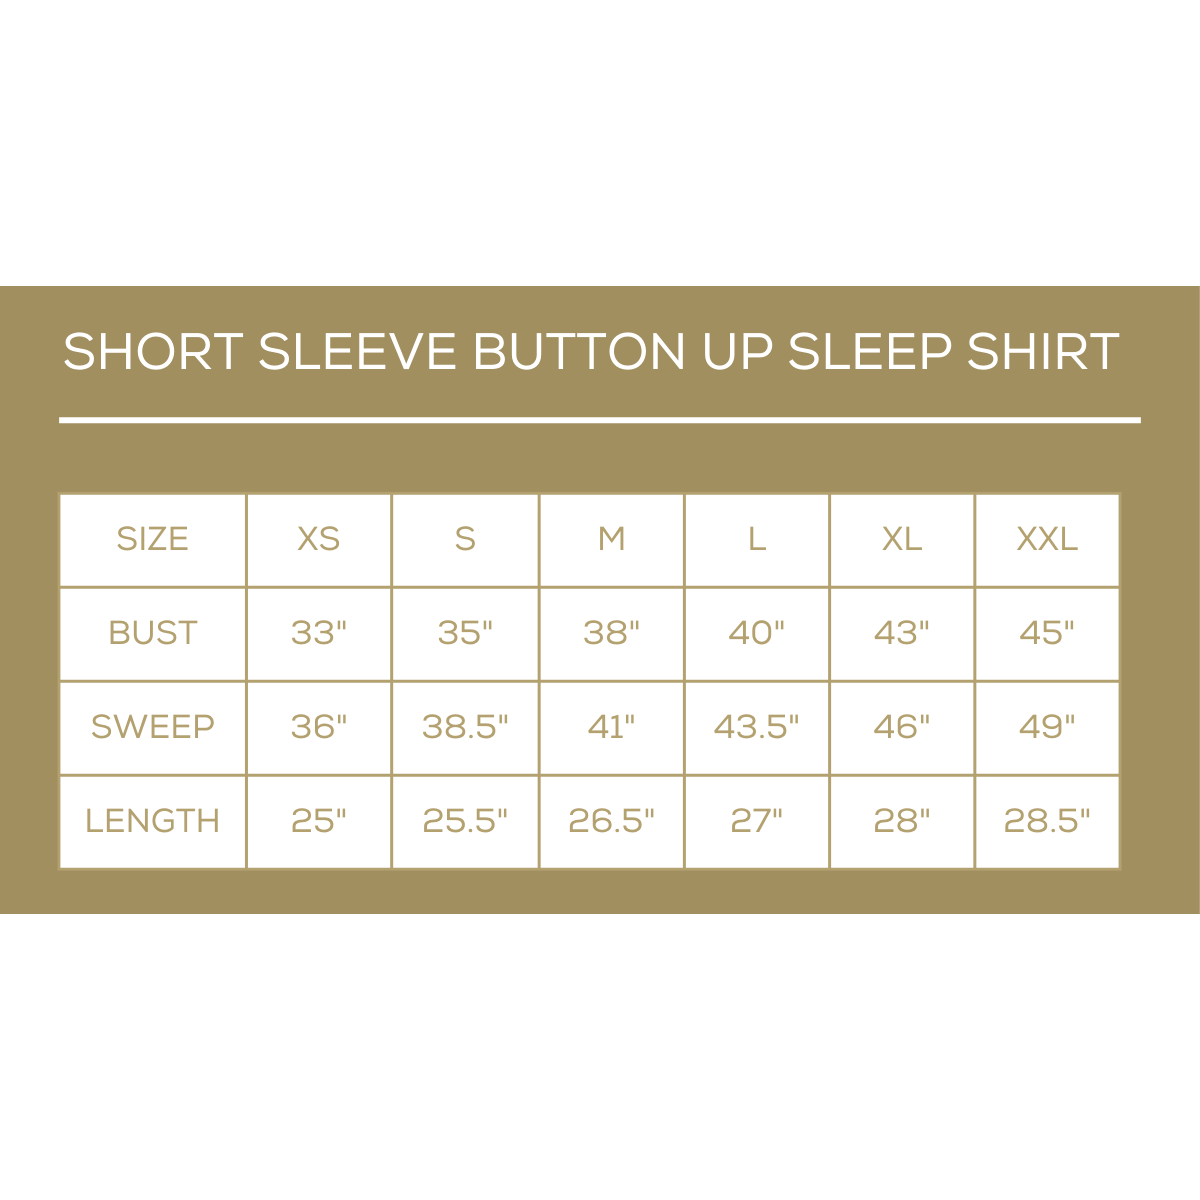 Louisiana Pride Short Sleeve Button Up Sleep Shirt